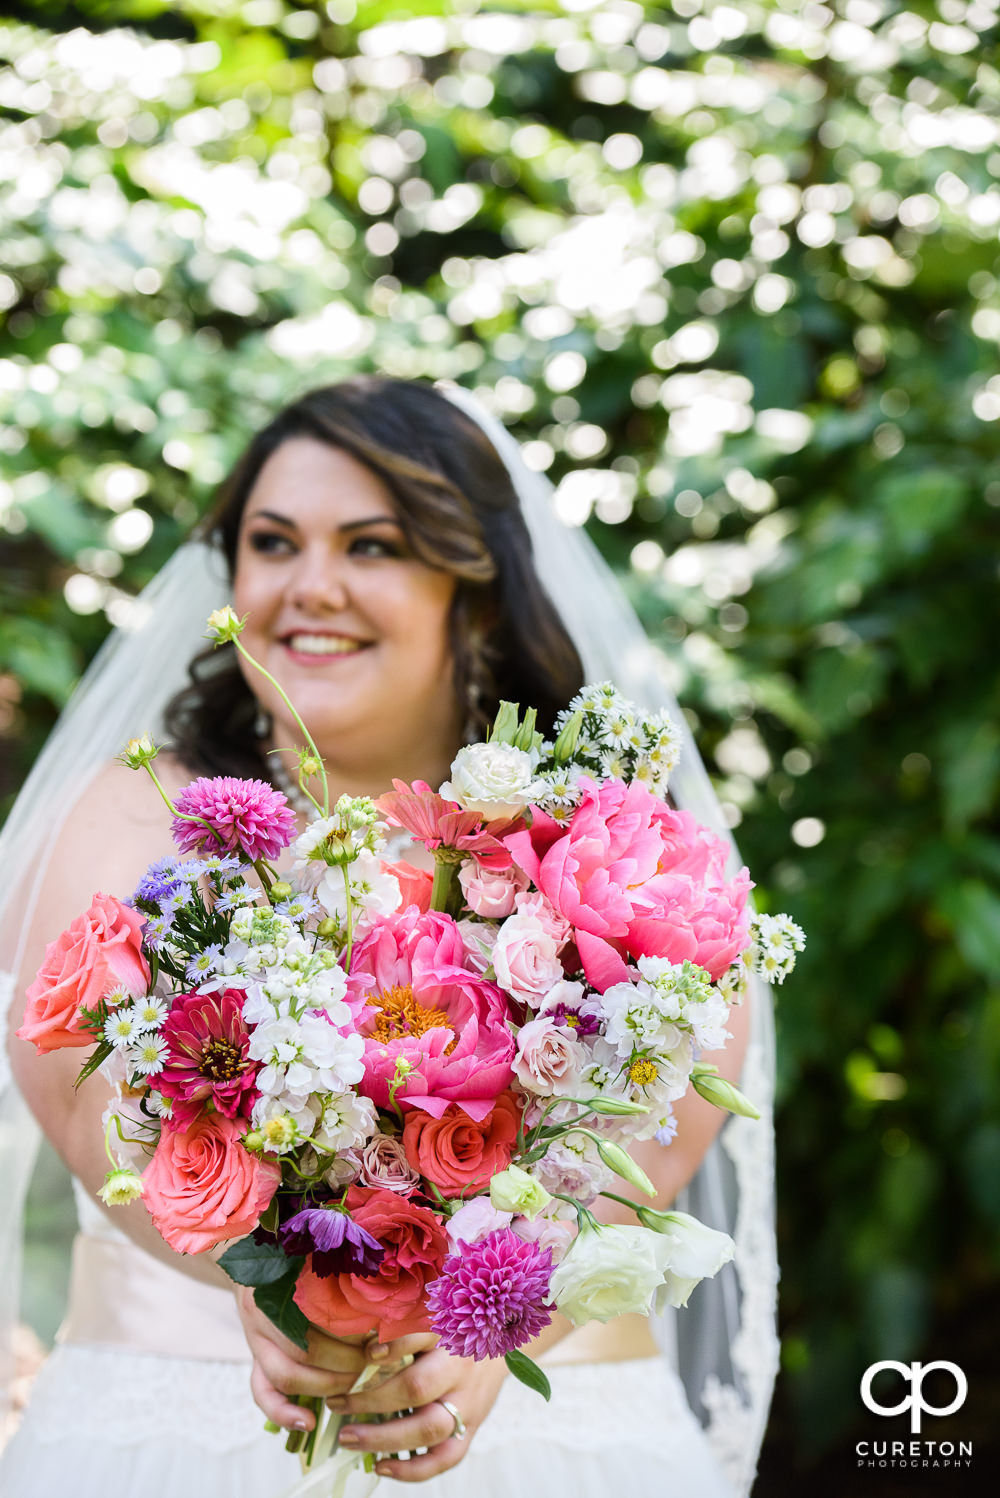 Bride holding her bouquet.